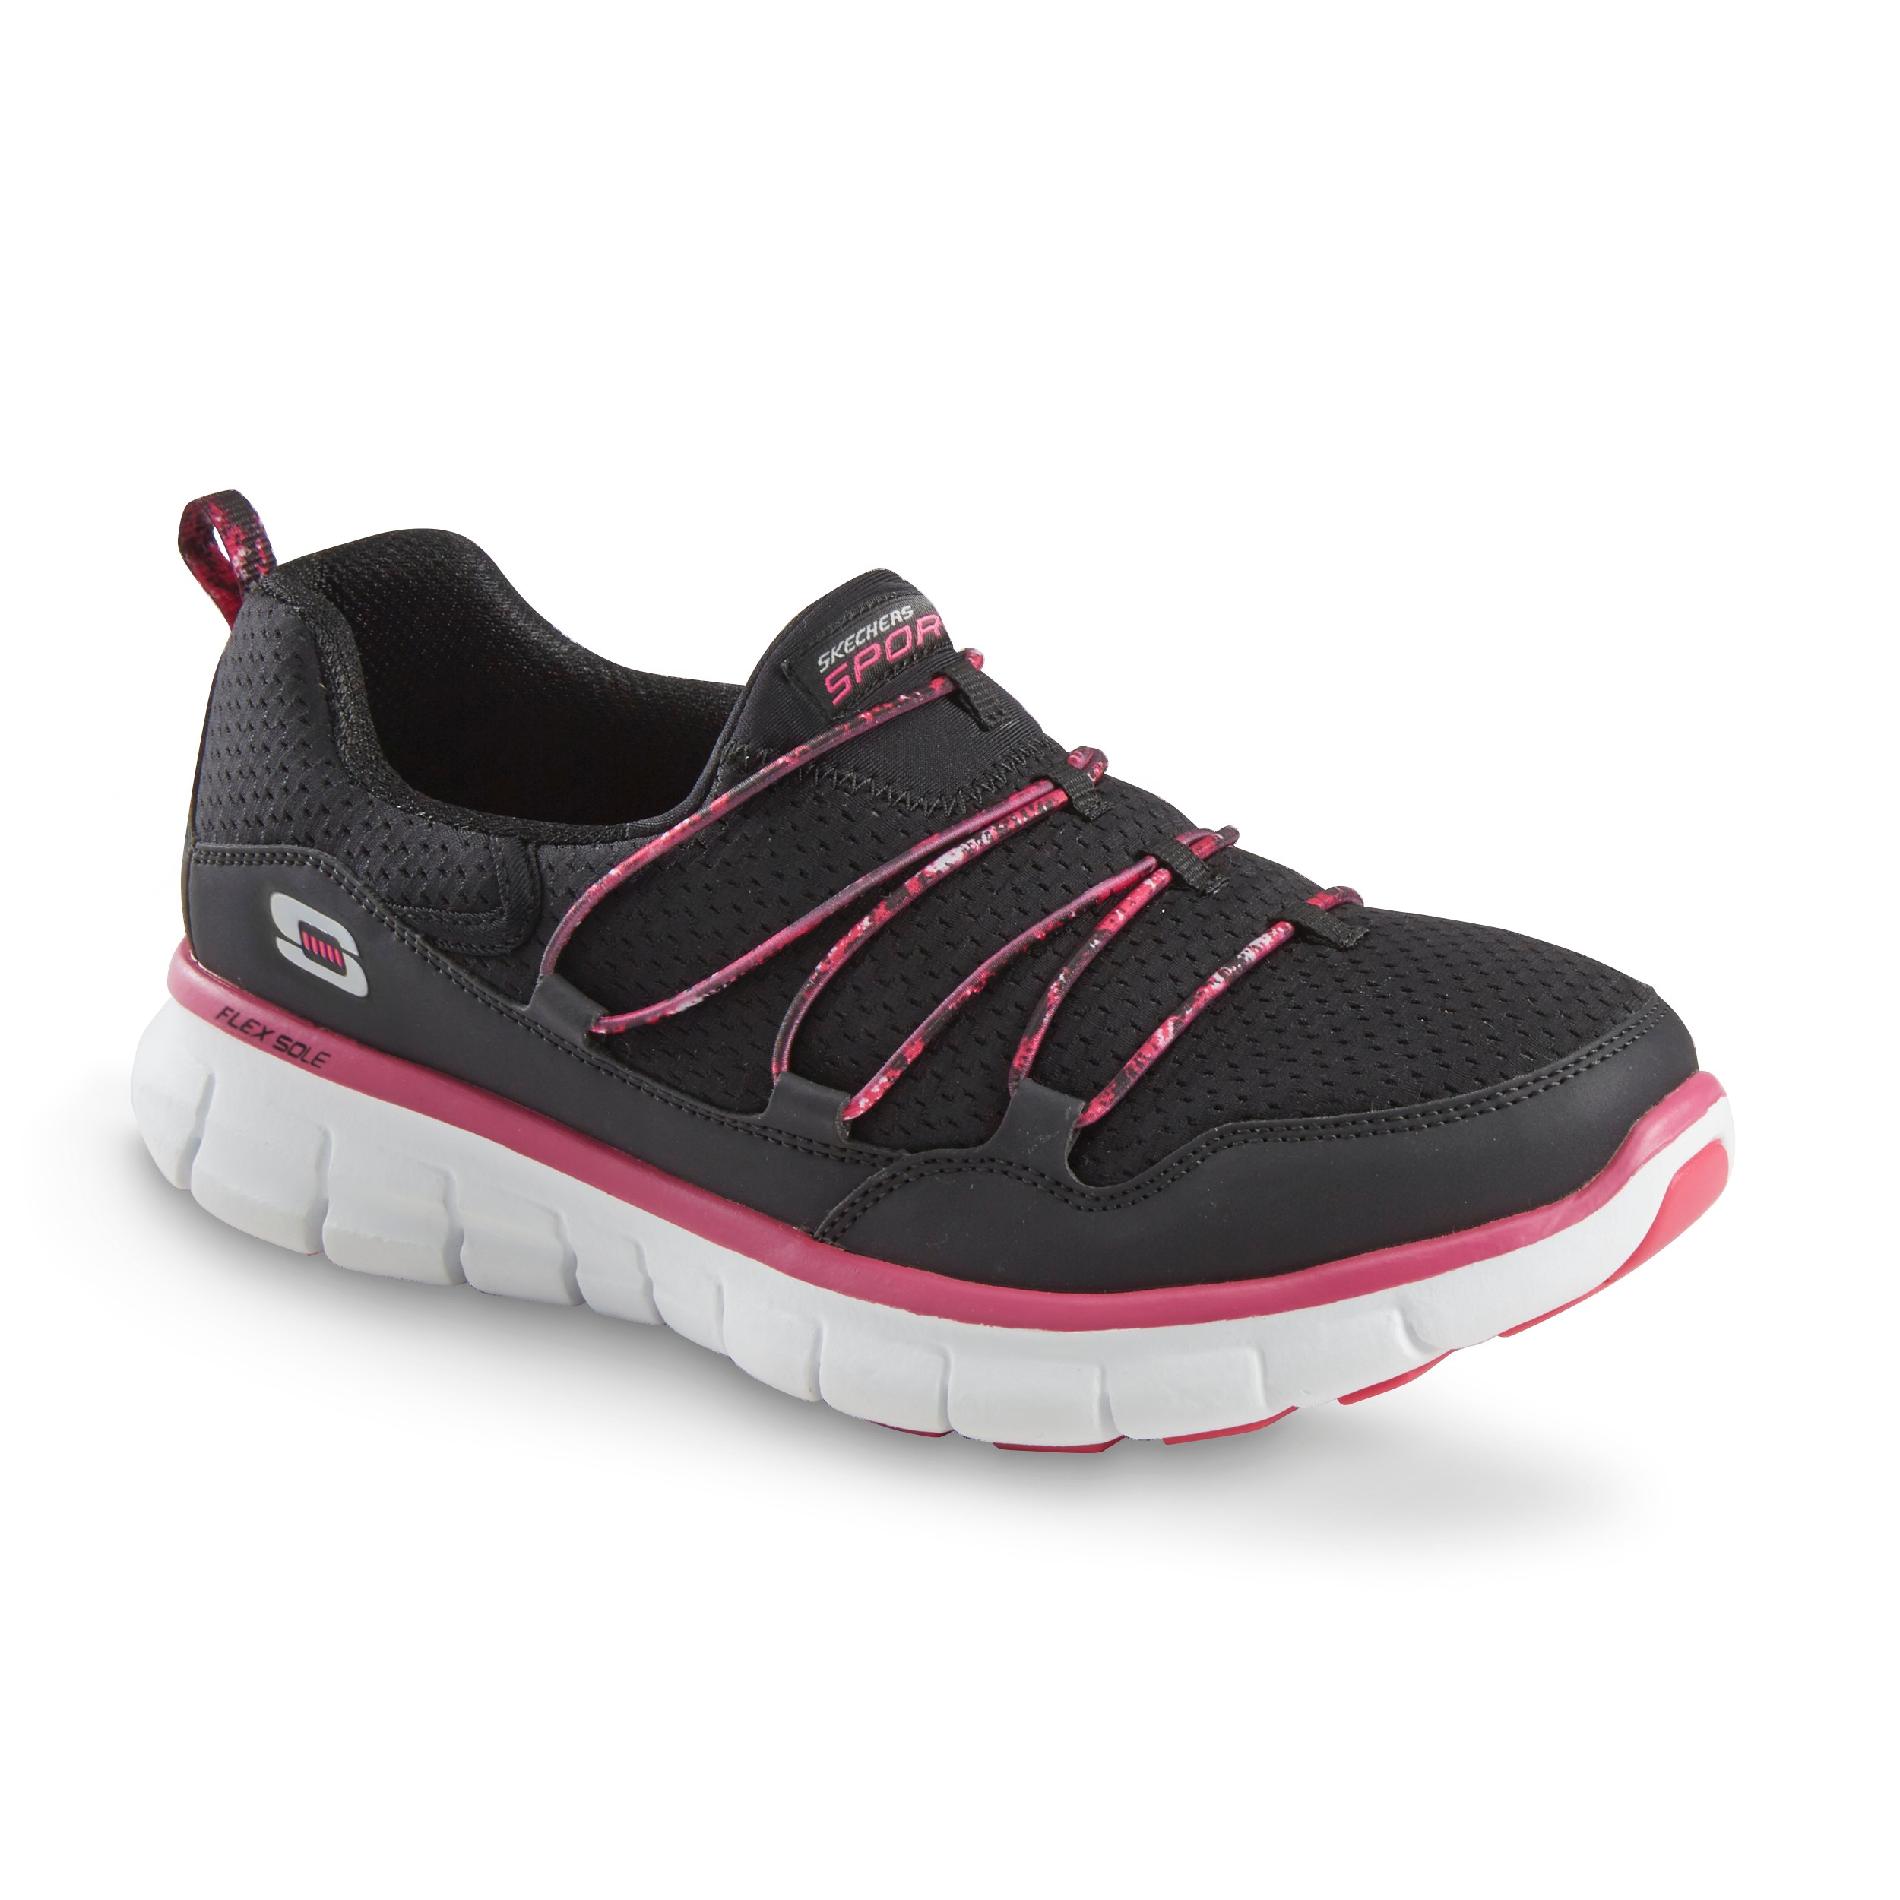 Skechers Women's Good Stuff Black/Pink Athletic Shoe